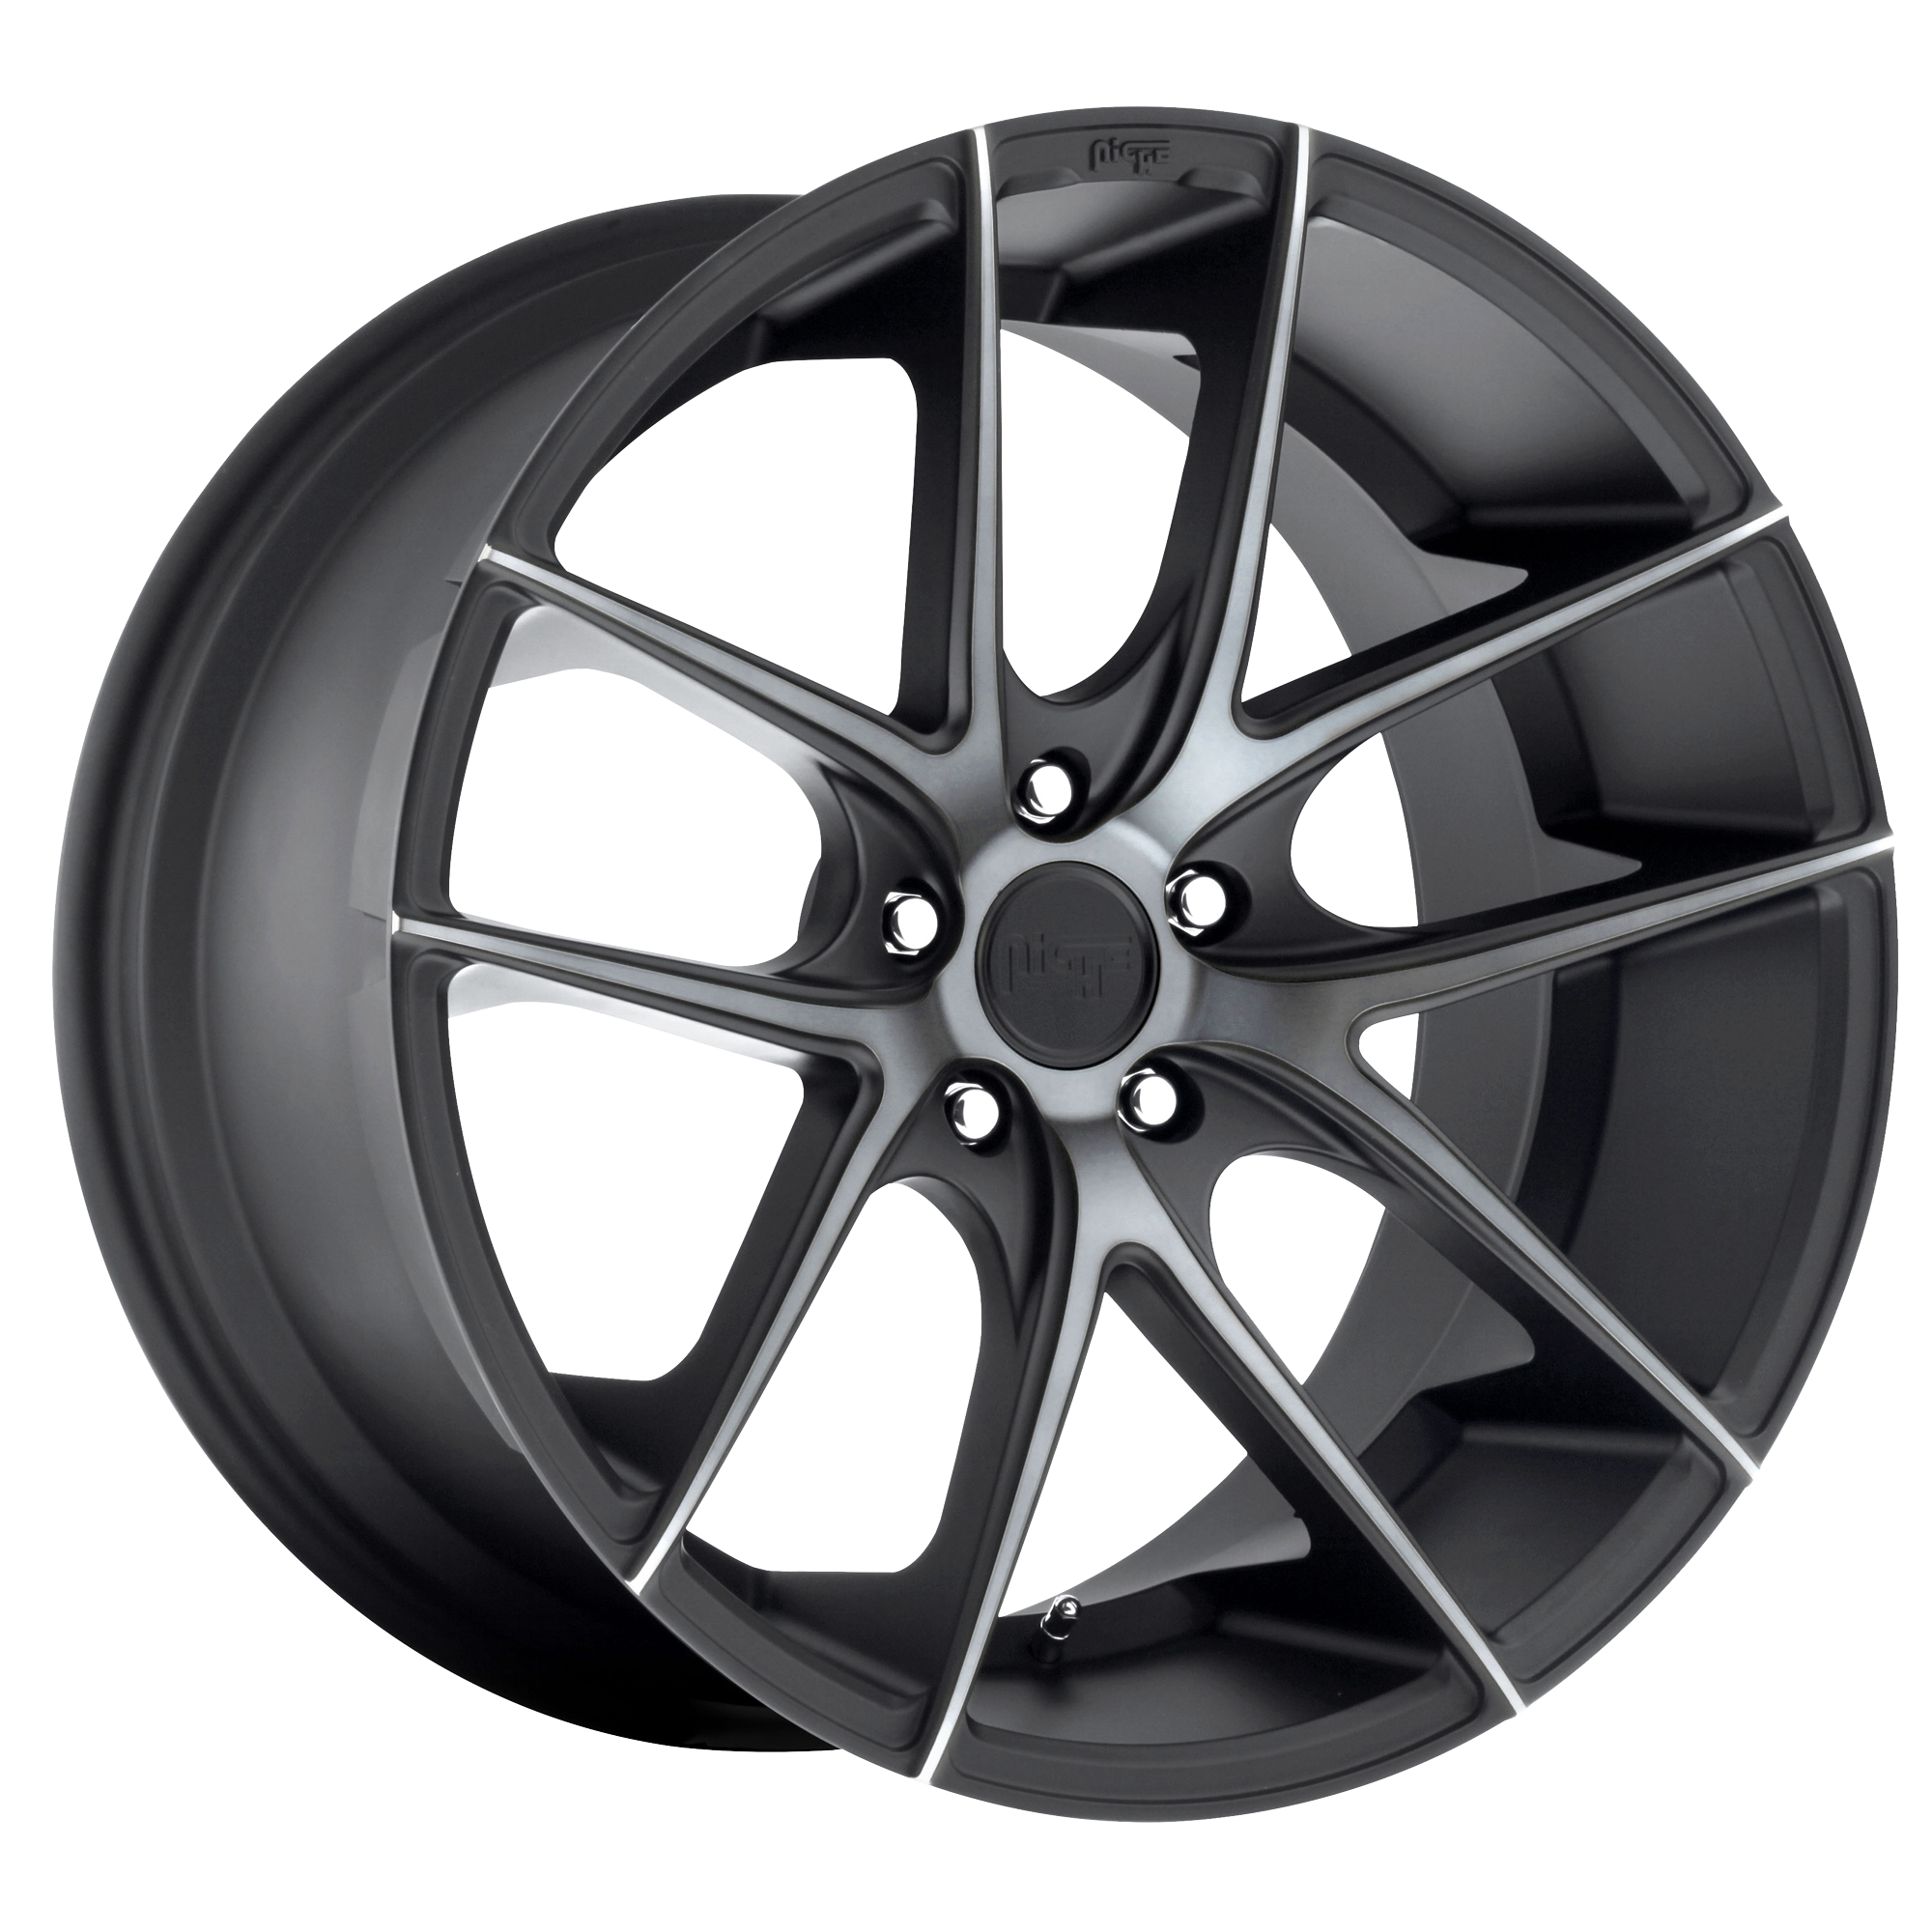 TARGA 18x8 5x100.00 MATTE BLACK DOUBLE DARK TINT (40 mm) - Tires and Engine Performance